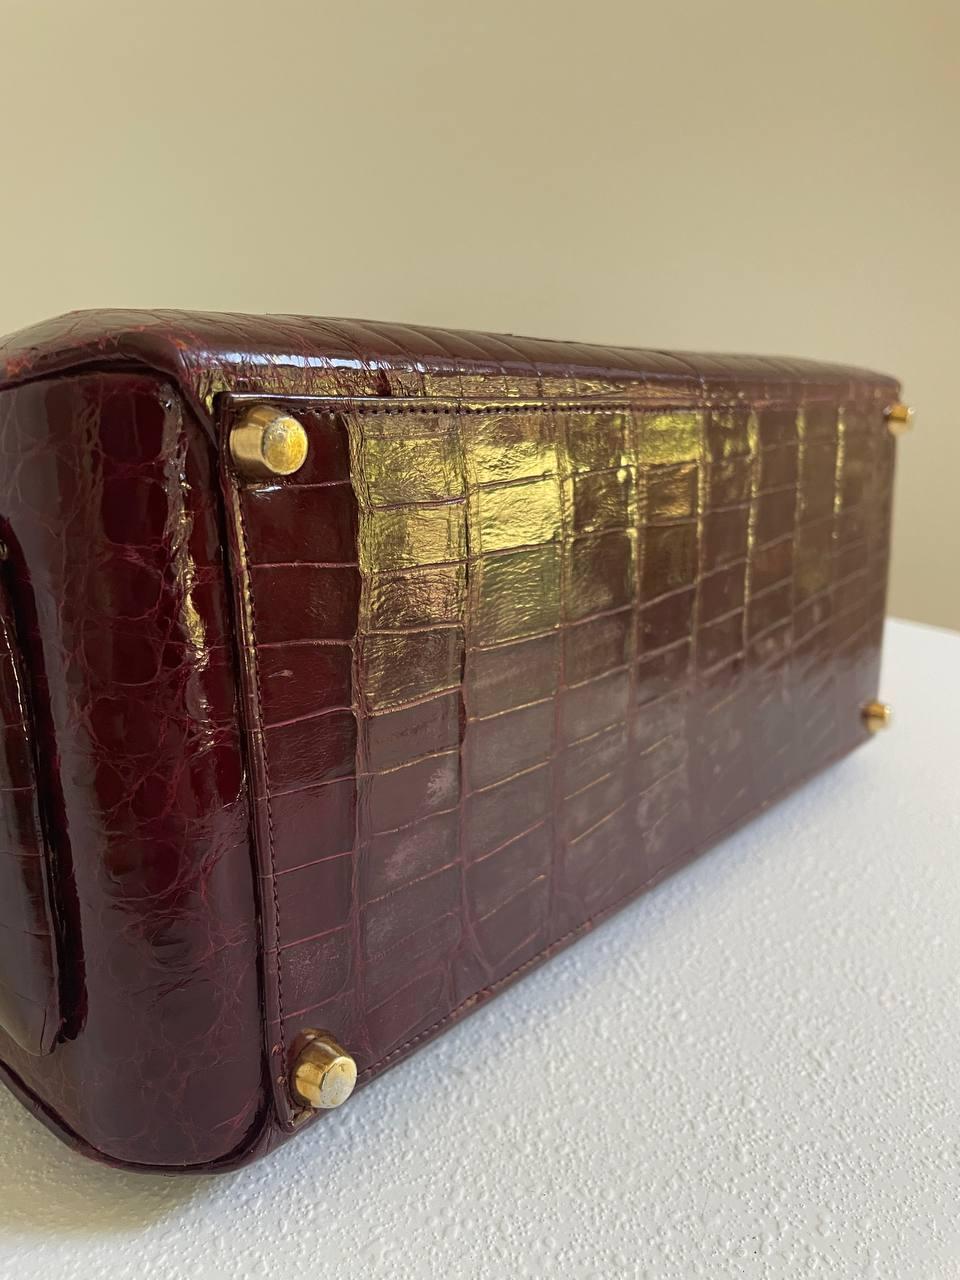 Vintage Lederer vanity case in burgundy crocodile leather. 
Gold-tone hardware.
Leather lining. 
Buckle closure. 
Measurements: 
height: 10